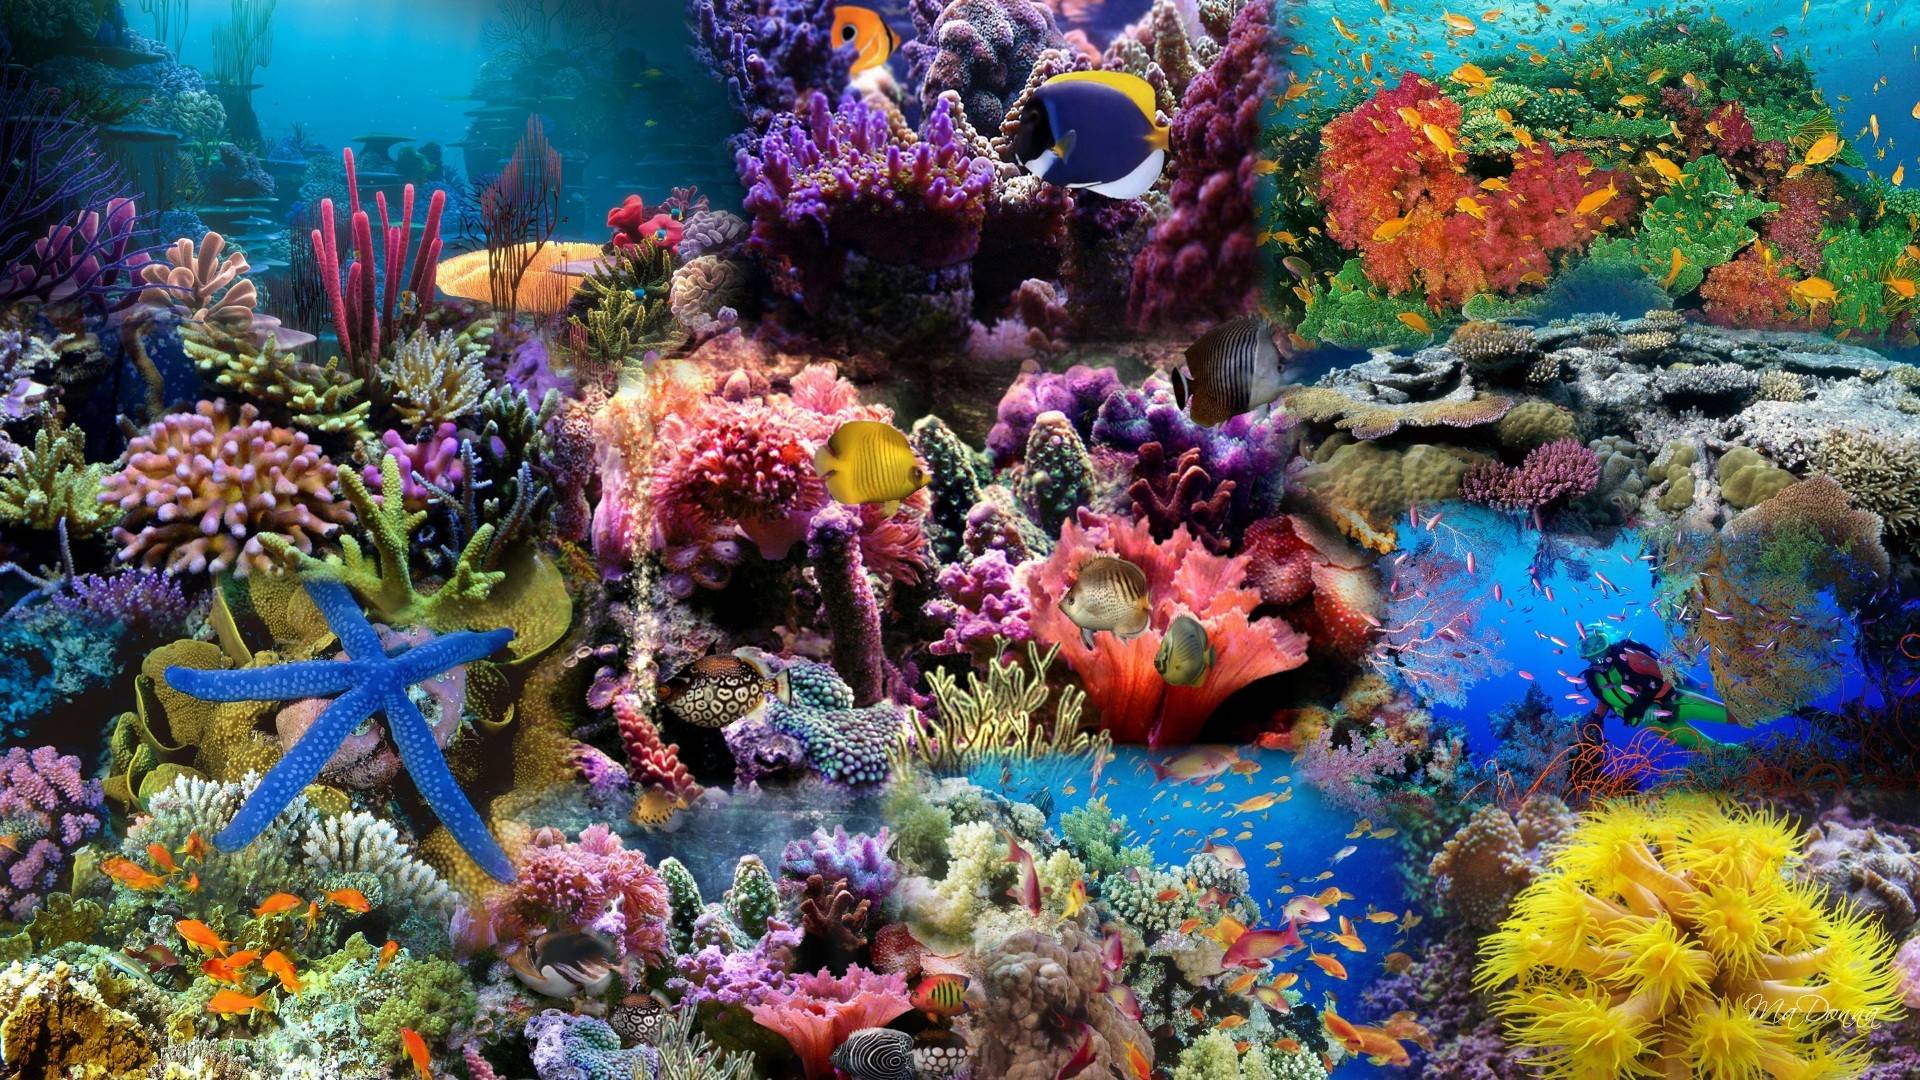 650 Aquarium wallpapers HD  Download Free backgrounds